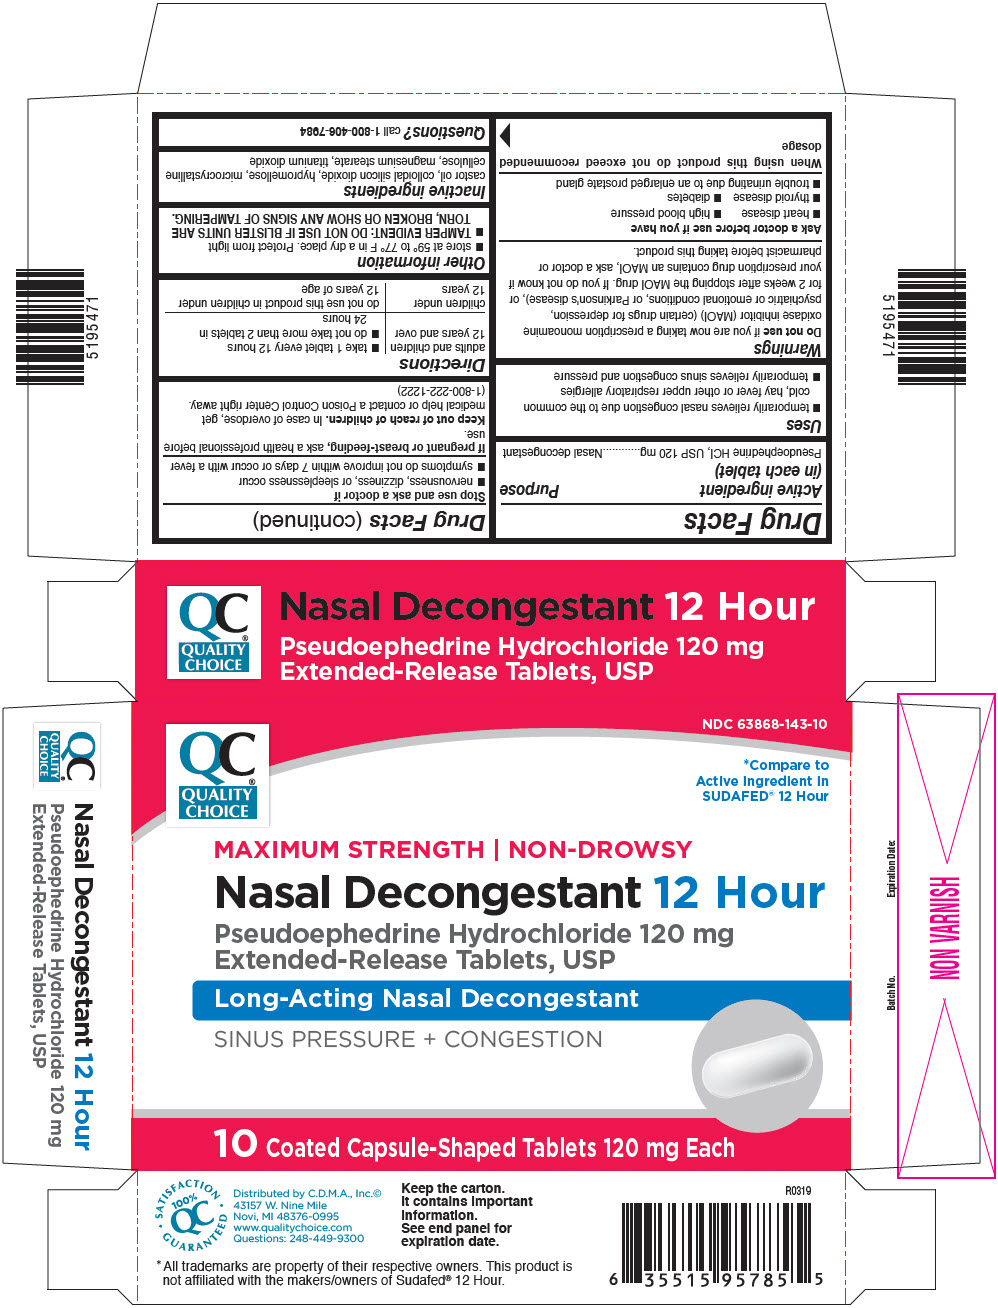 PRINCIPAL DISPLAY PANEL - 120 mg Tablet Blister Pack Carton